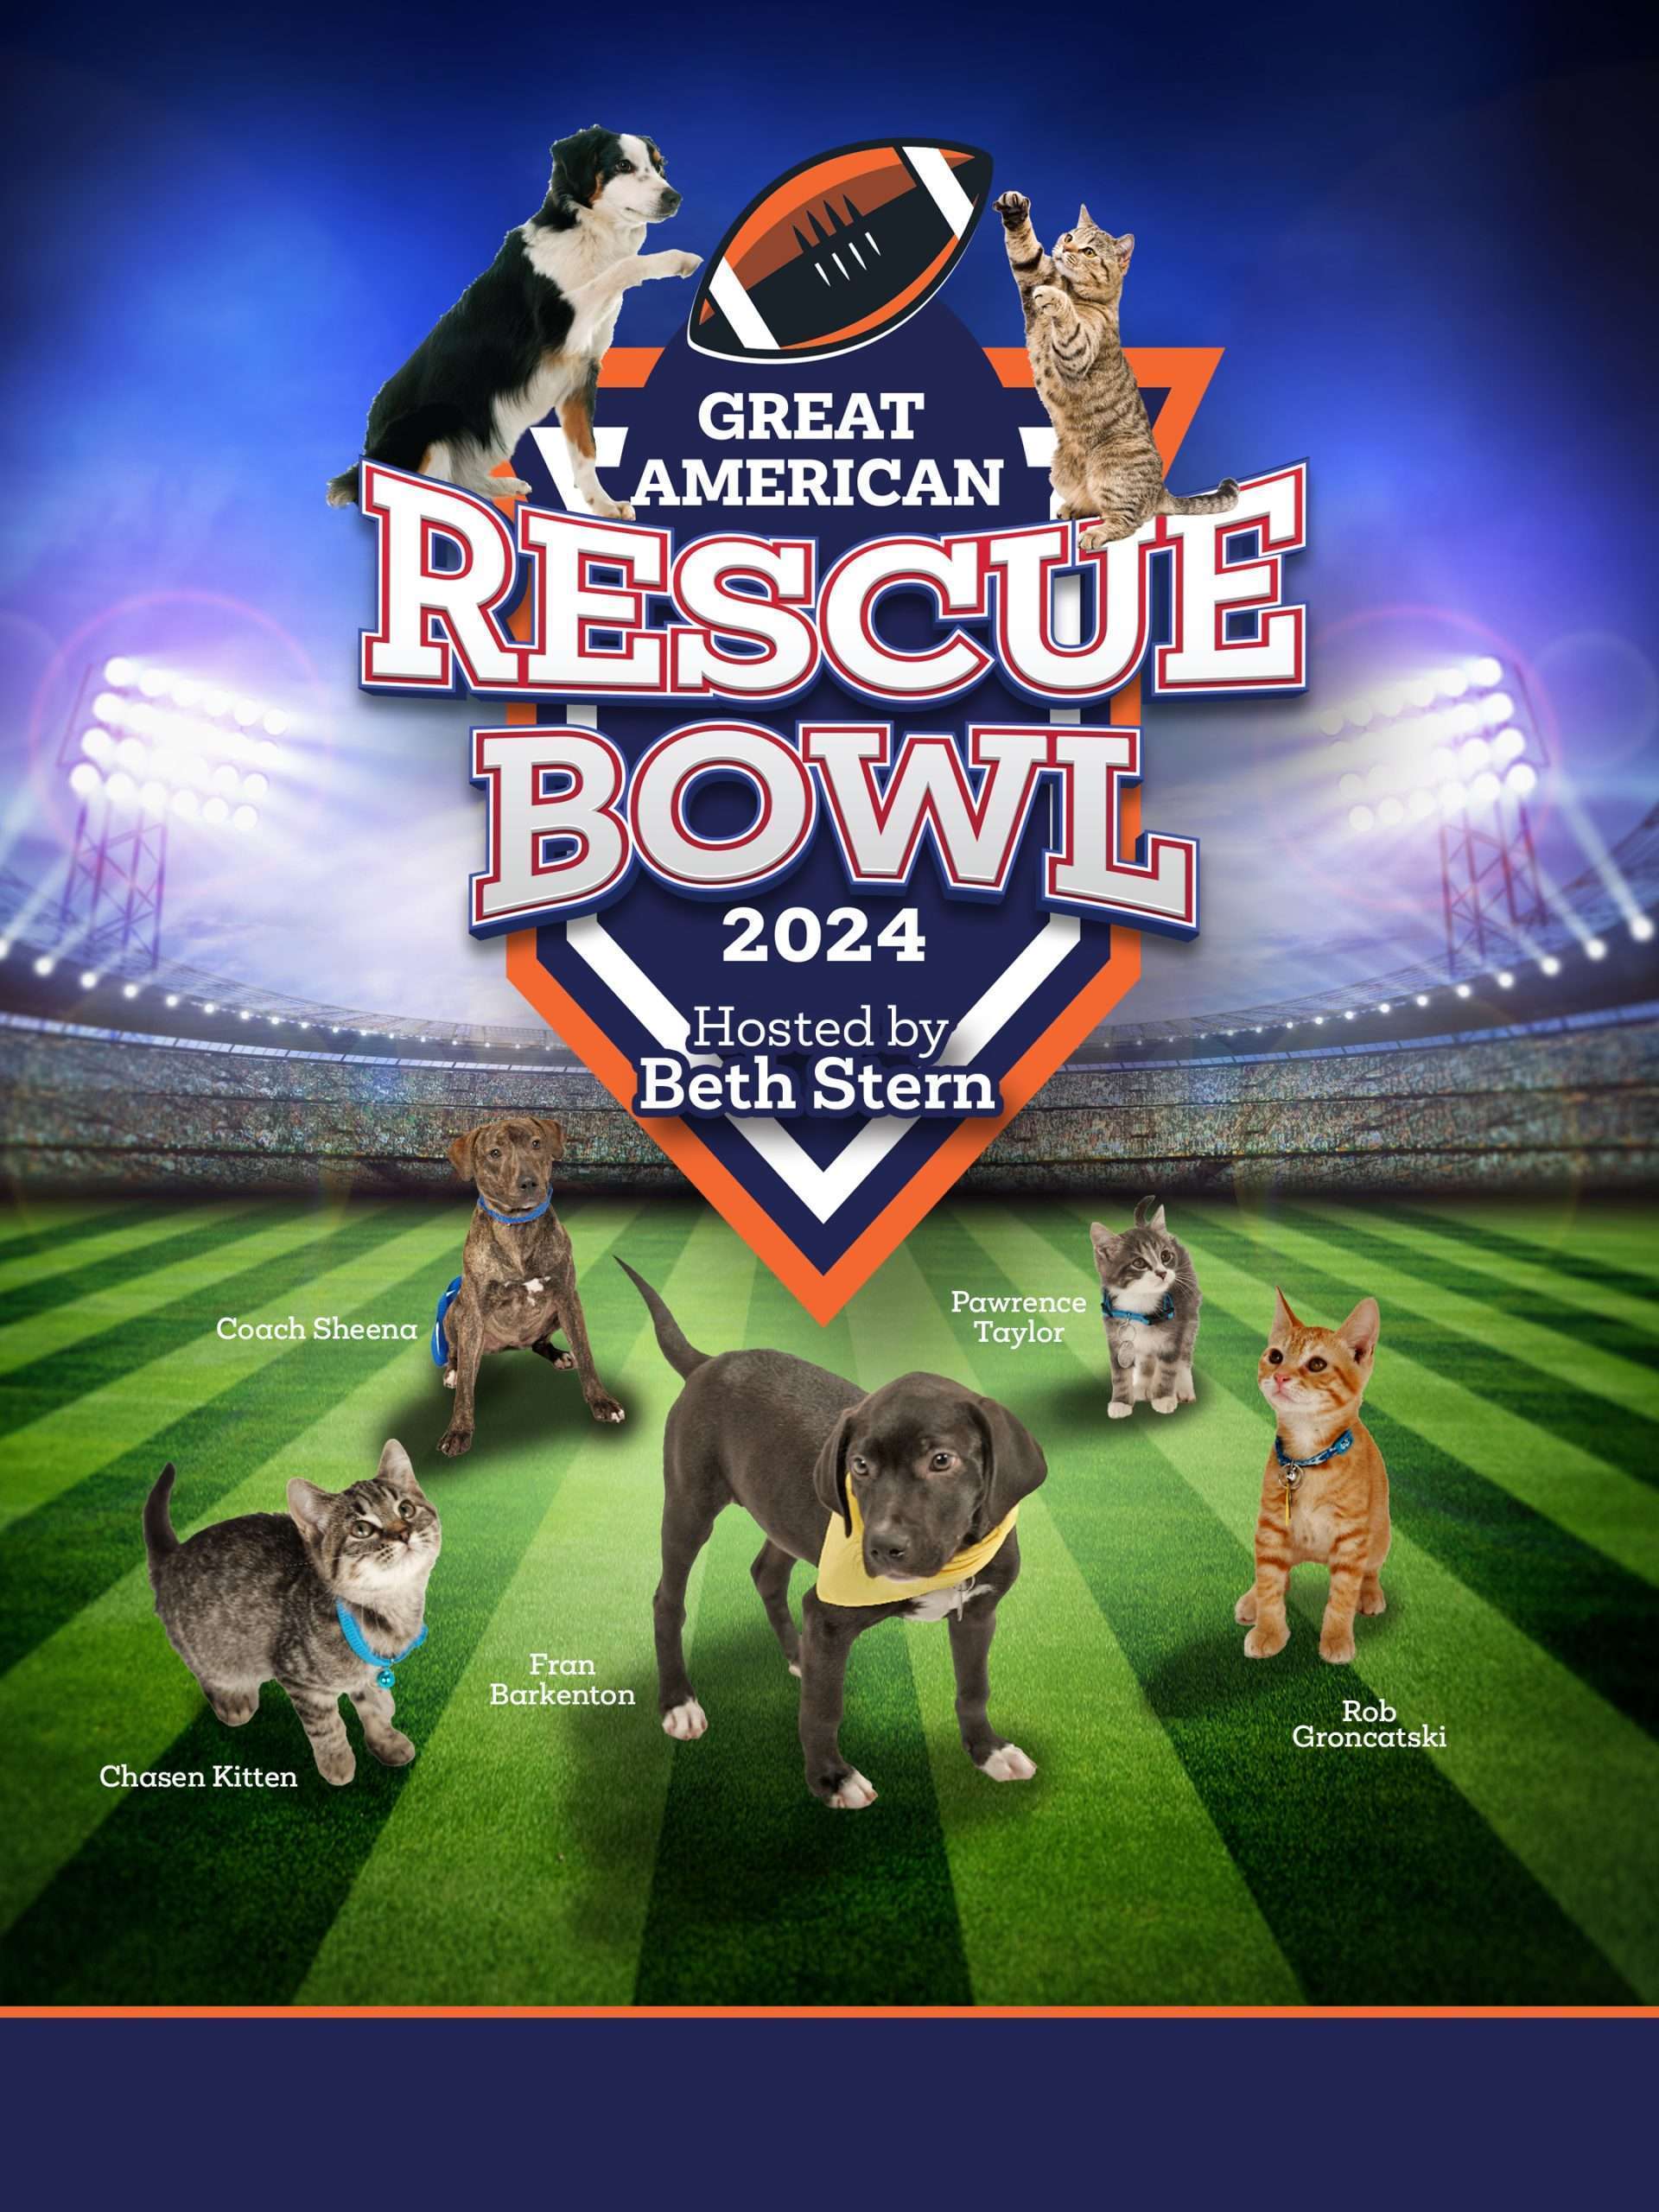 Great American Rescue Bowl 2024 February 11 2024 on GFAM TV Regular